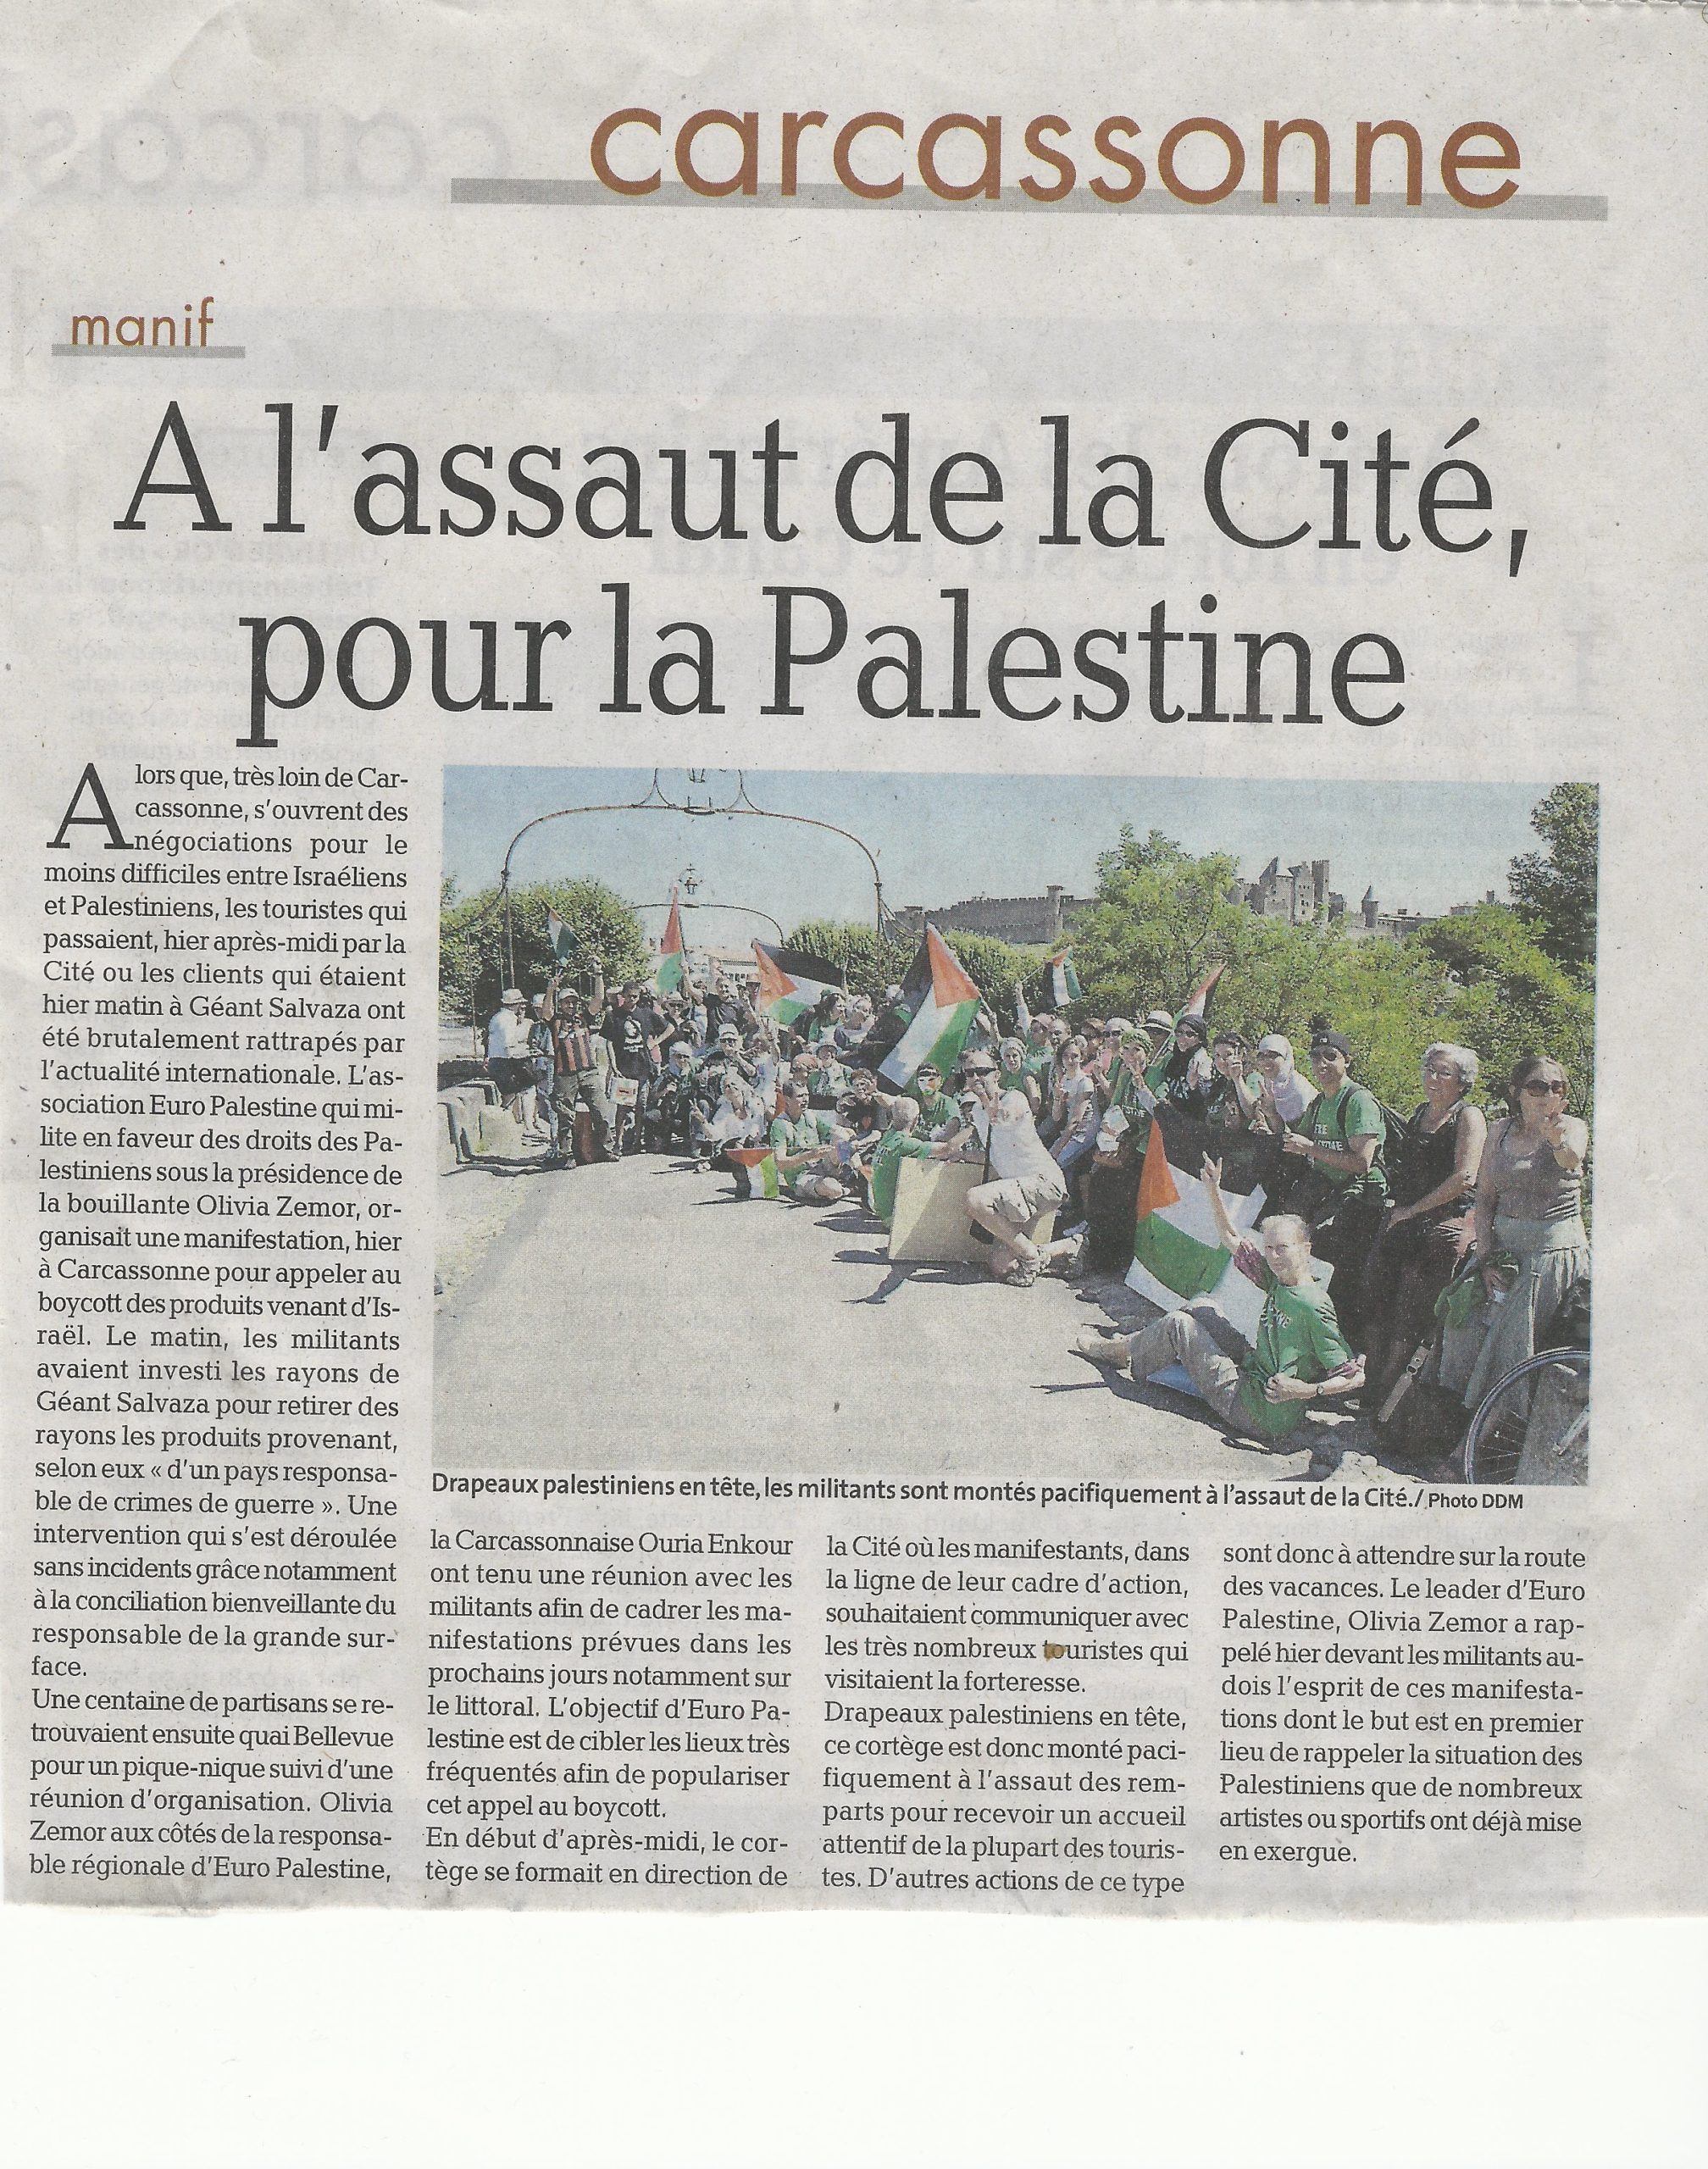 carcassonne_article.jpg